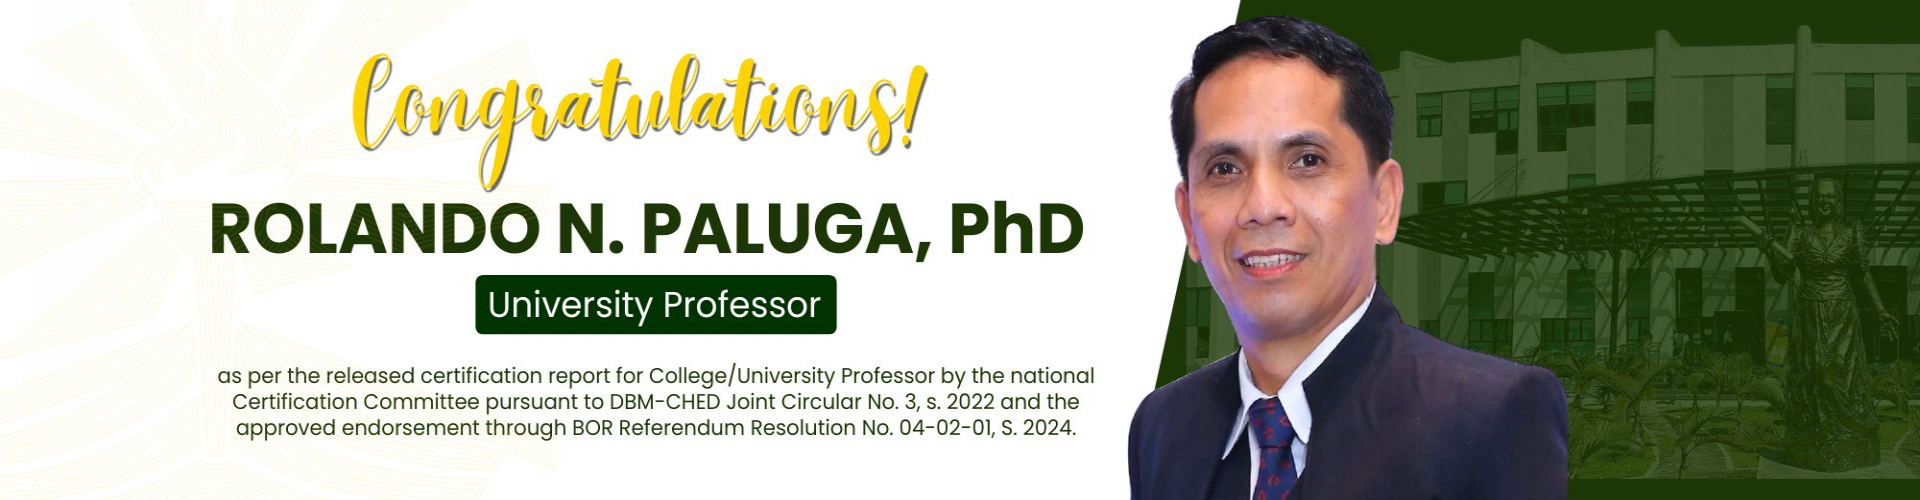 Congratulations! Rolando N. Paluga, PhD - University Profesor